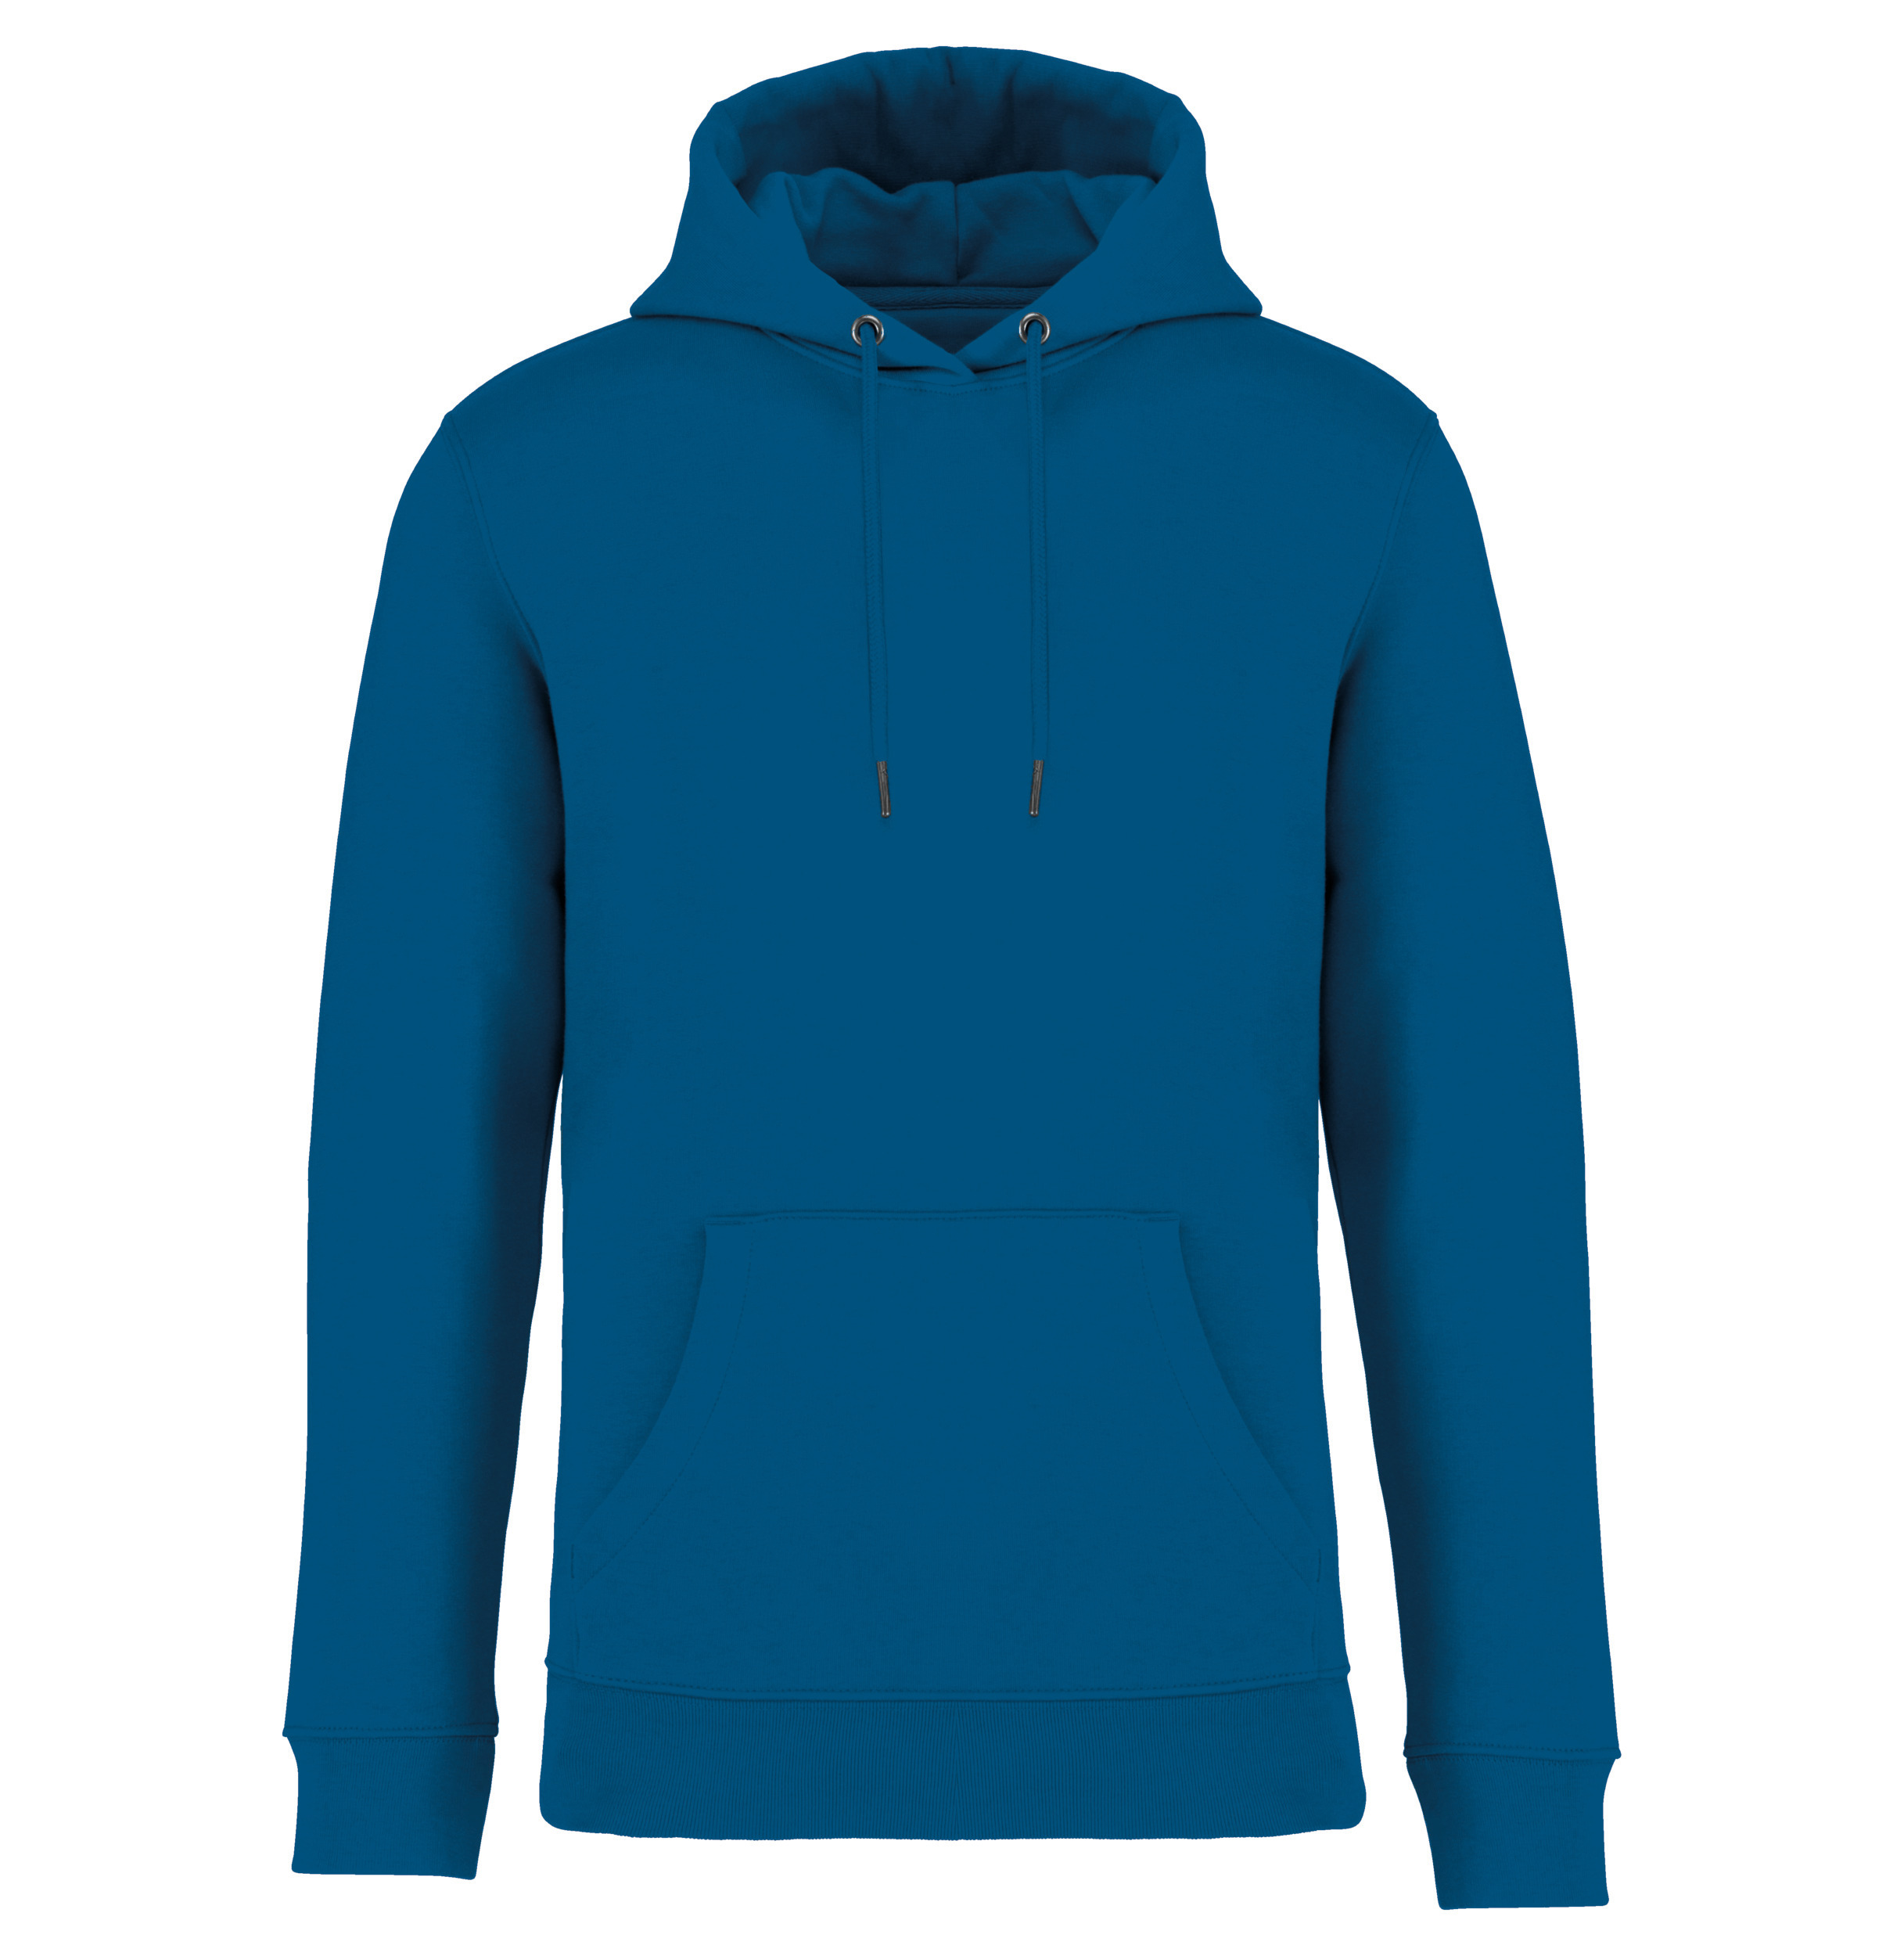 Unisex organic cotton hooded sweatshirt 350 g/m² cotton ART® Blue Sapphire 3XL